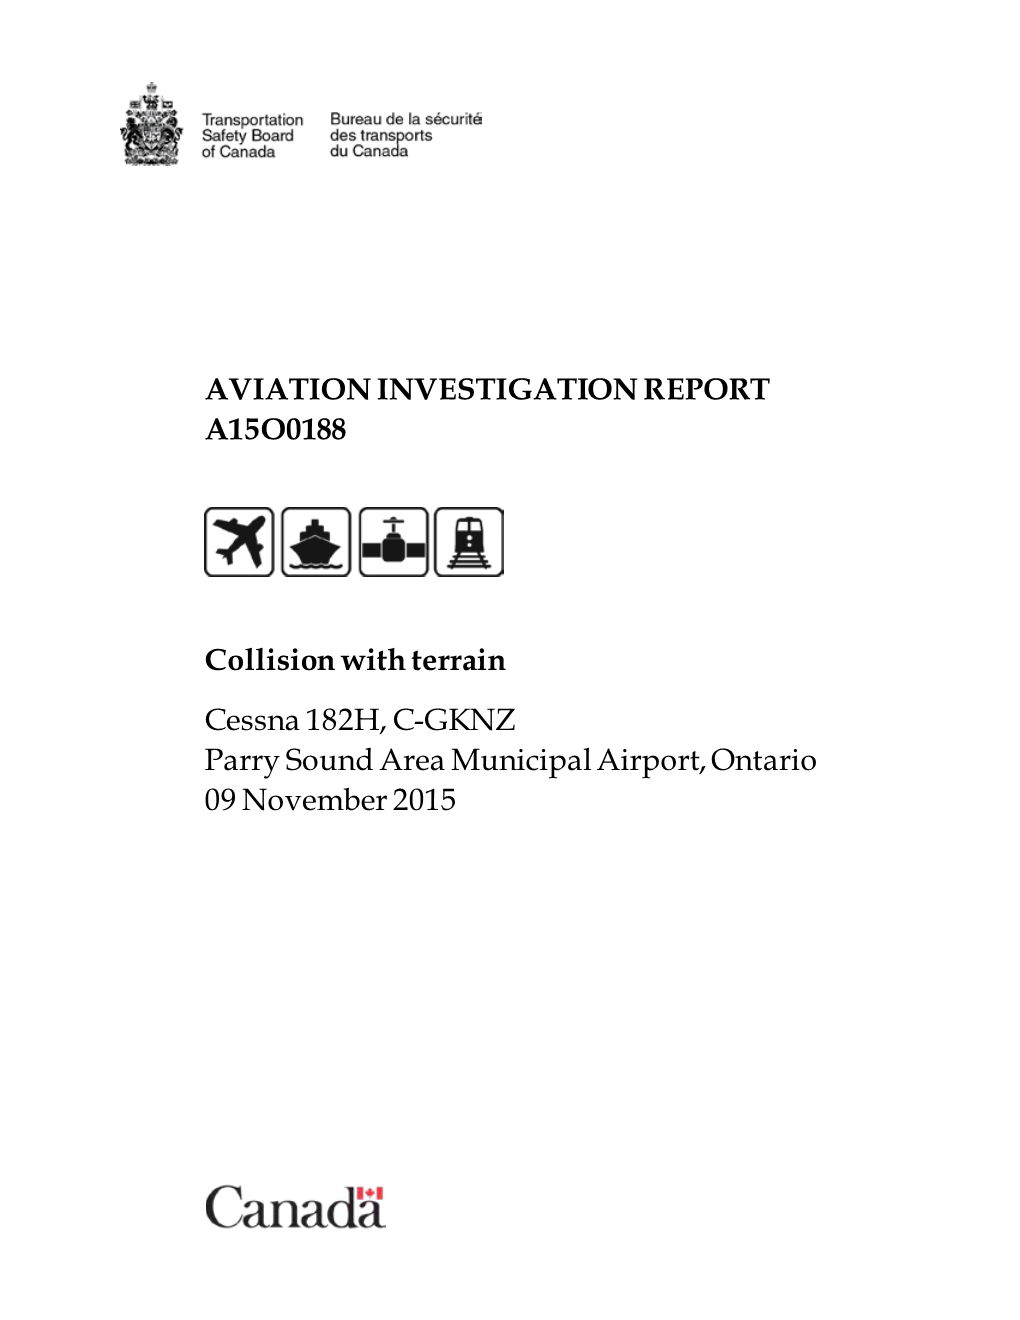 Aviation Investigation Report A15o0188